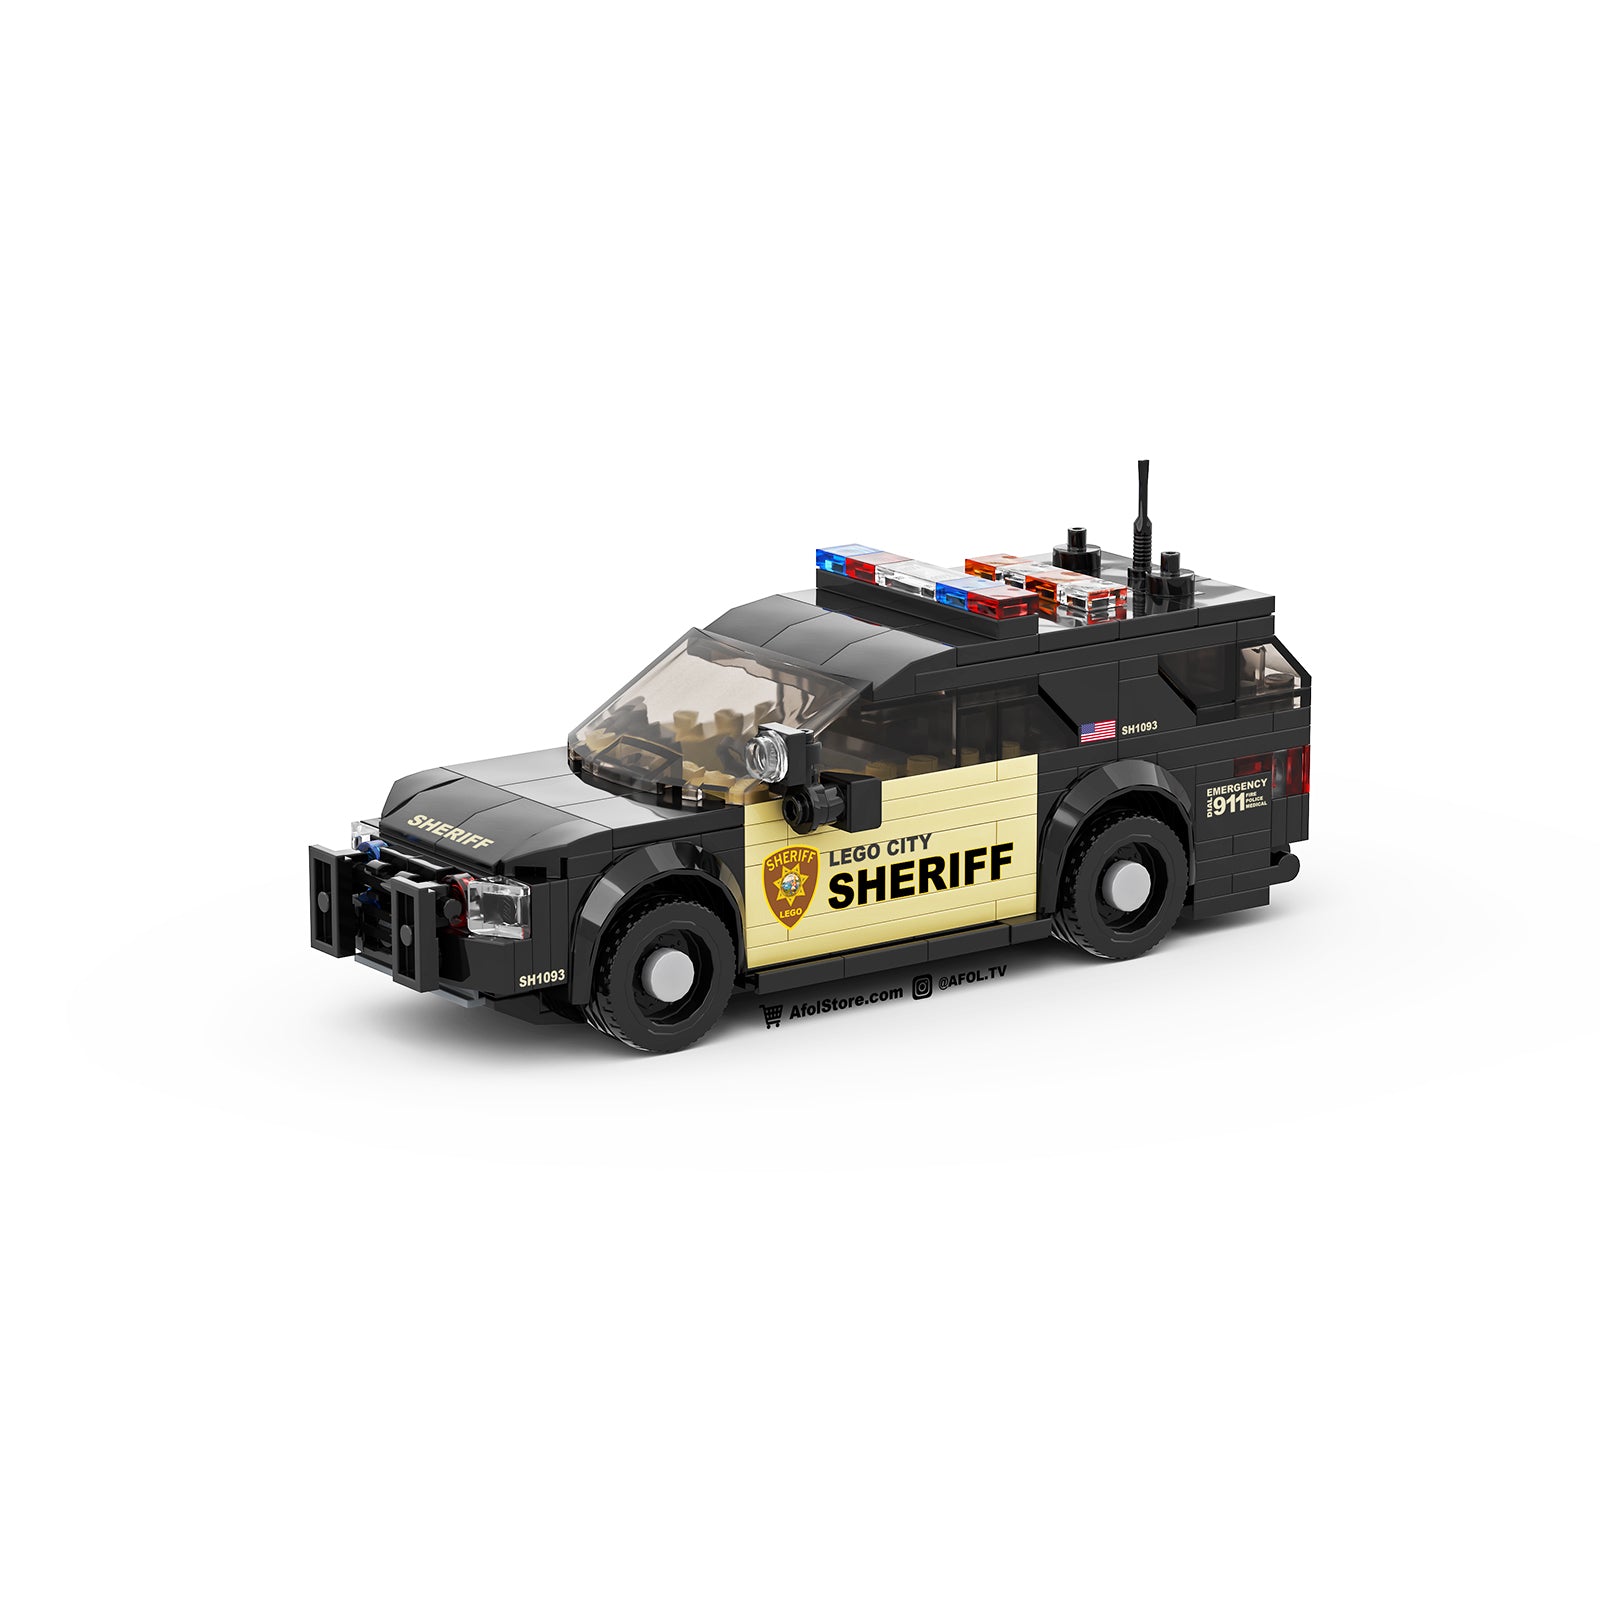 Resonate Rastløs shilling Lego Police Patrol Car Instructions | escapeauthority.com